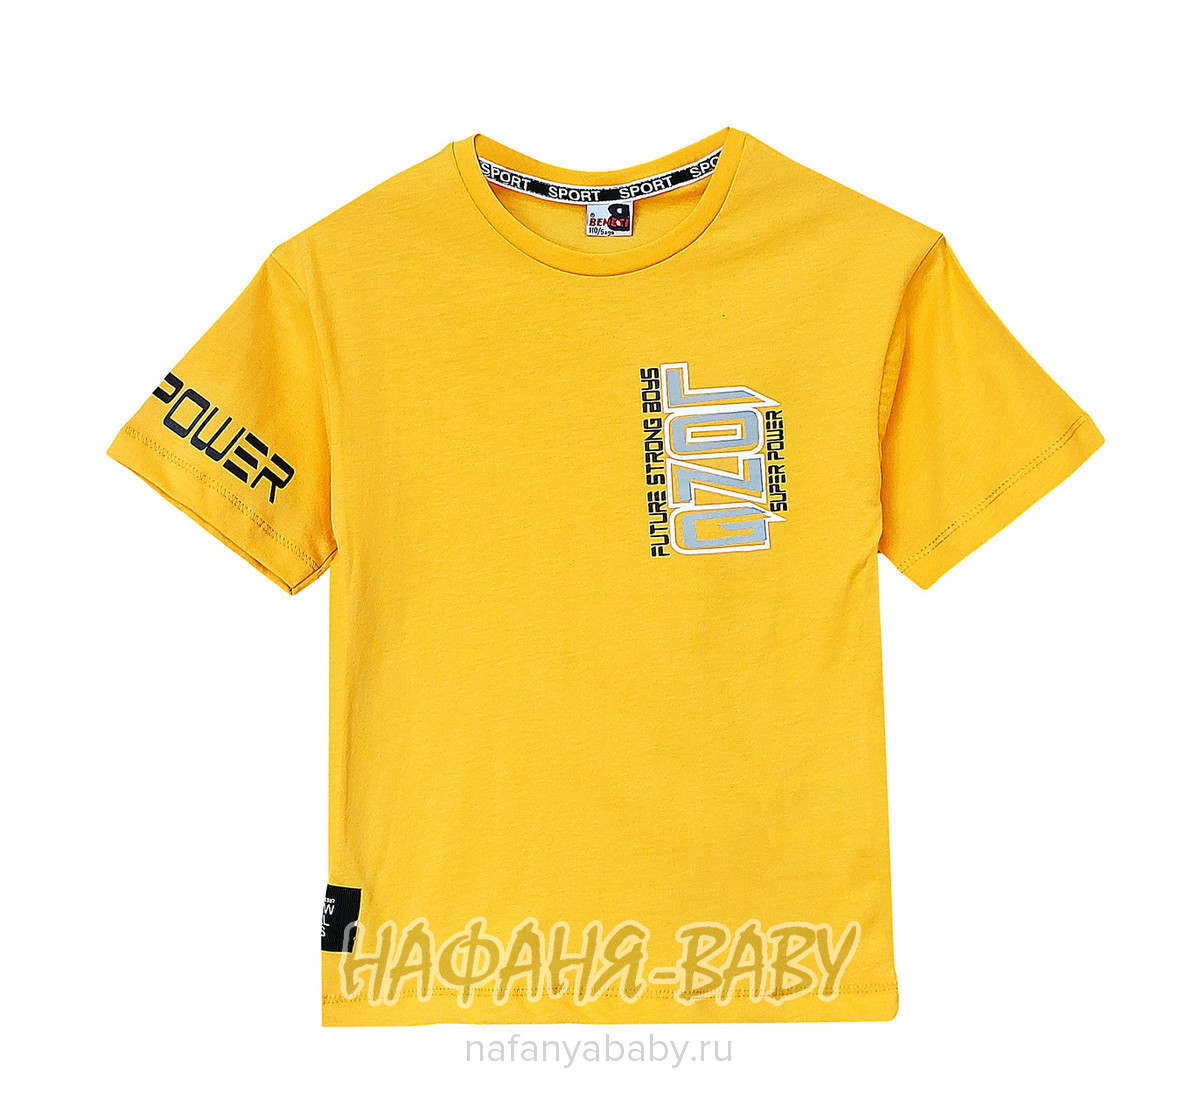 Детская футболка BENETI арт: 2818, 5-9 лет, цвет желтый, оптом Турция